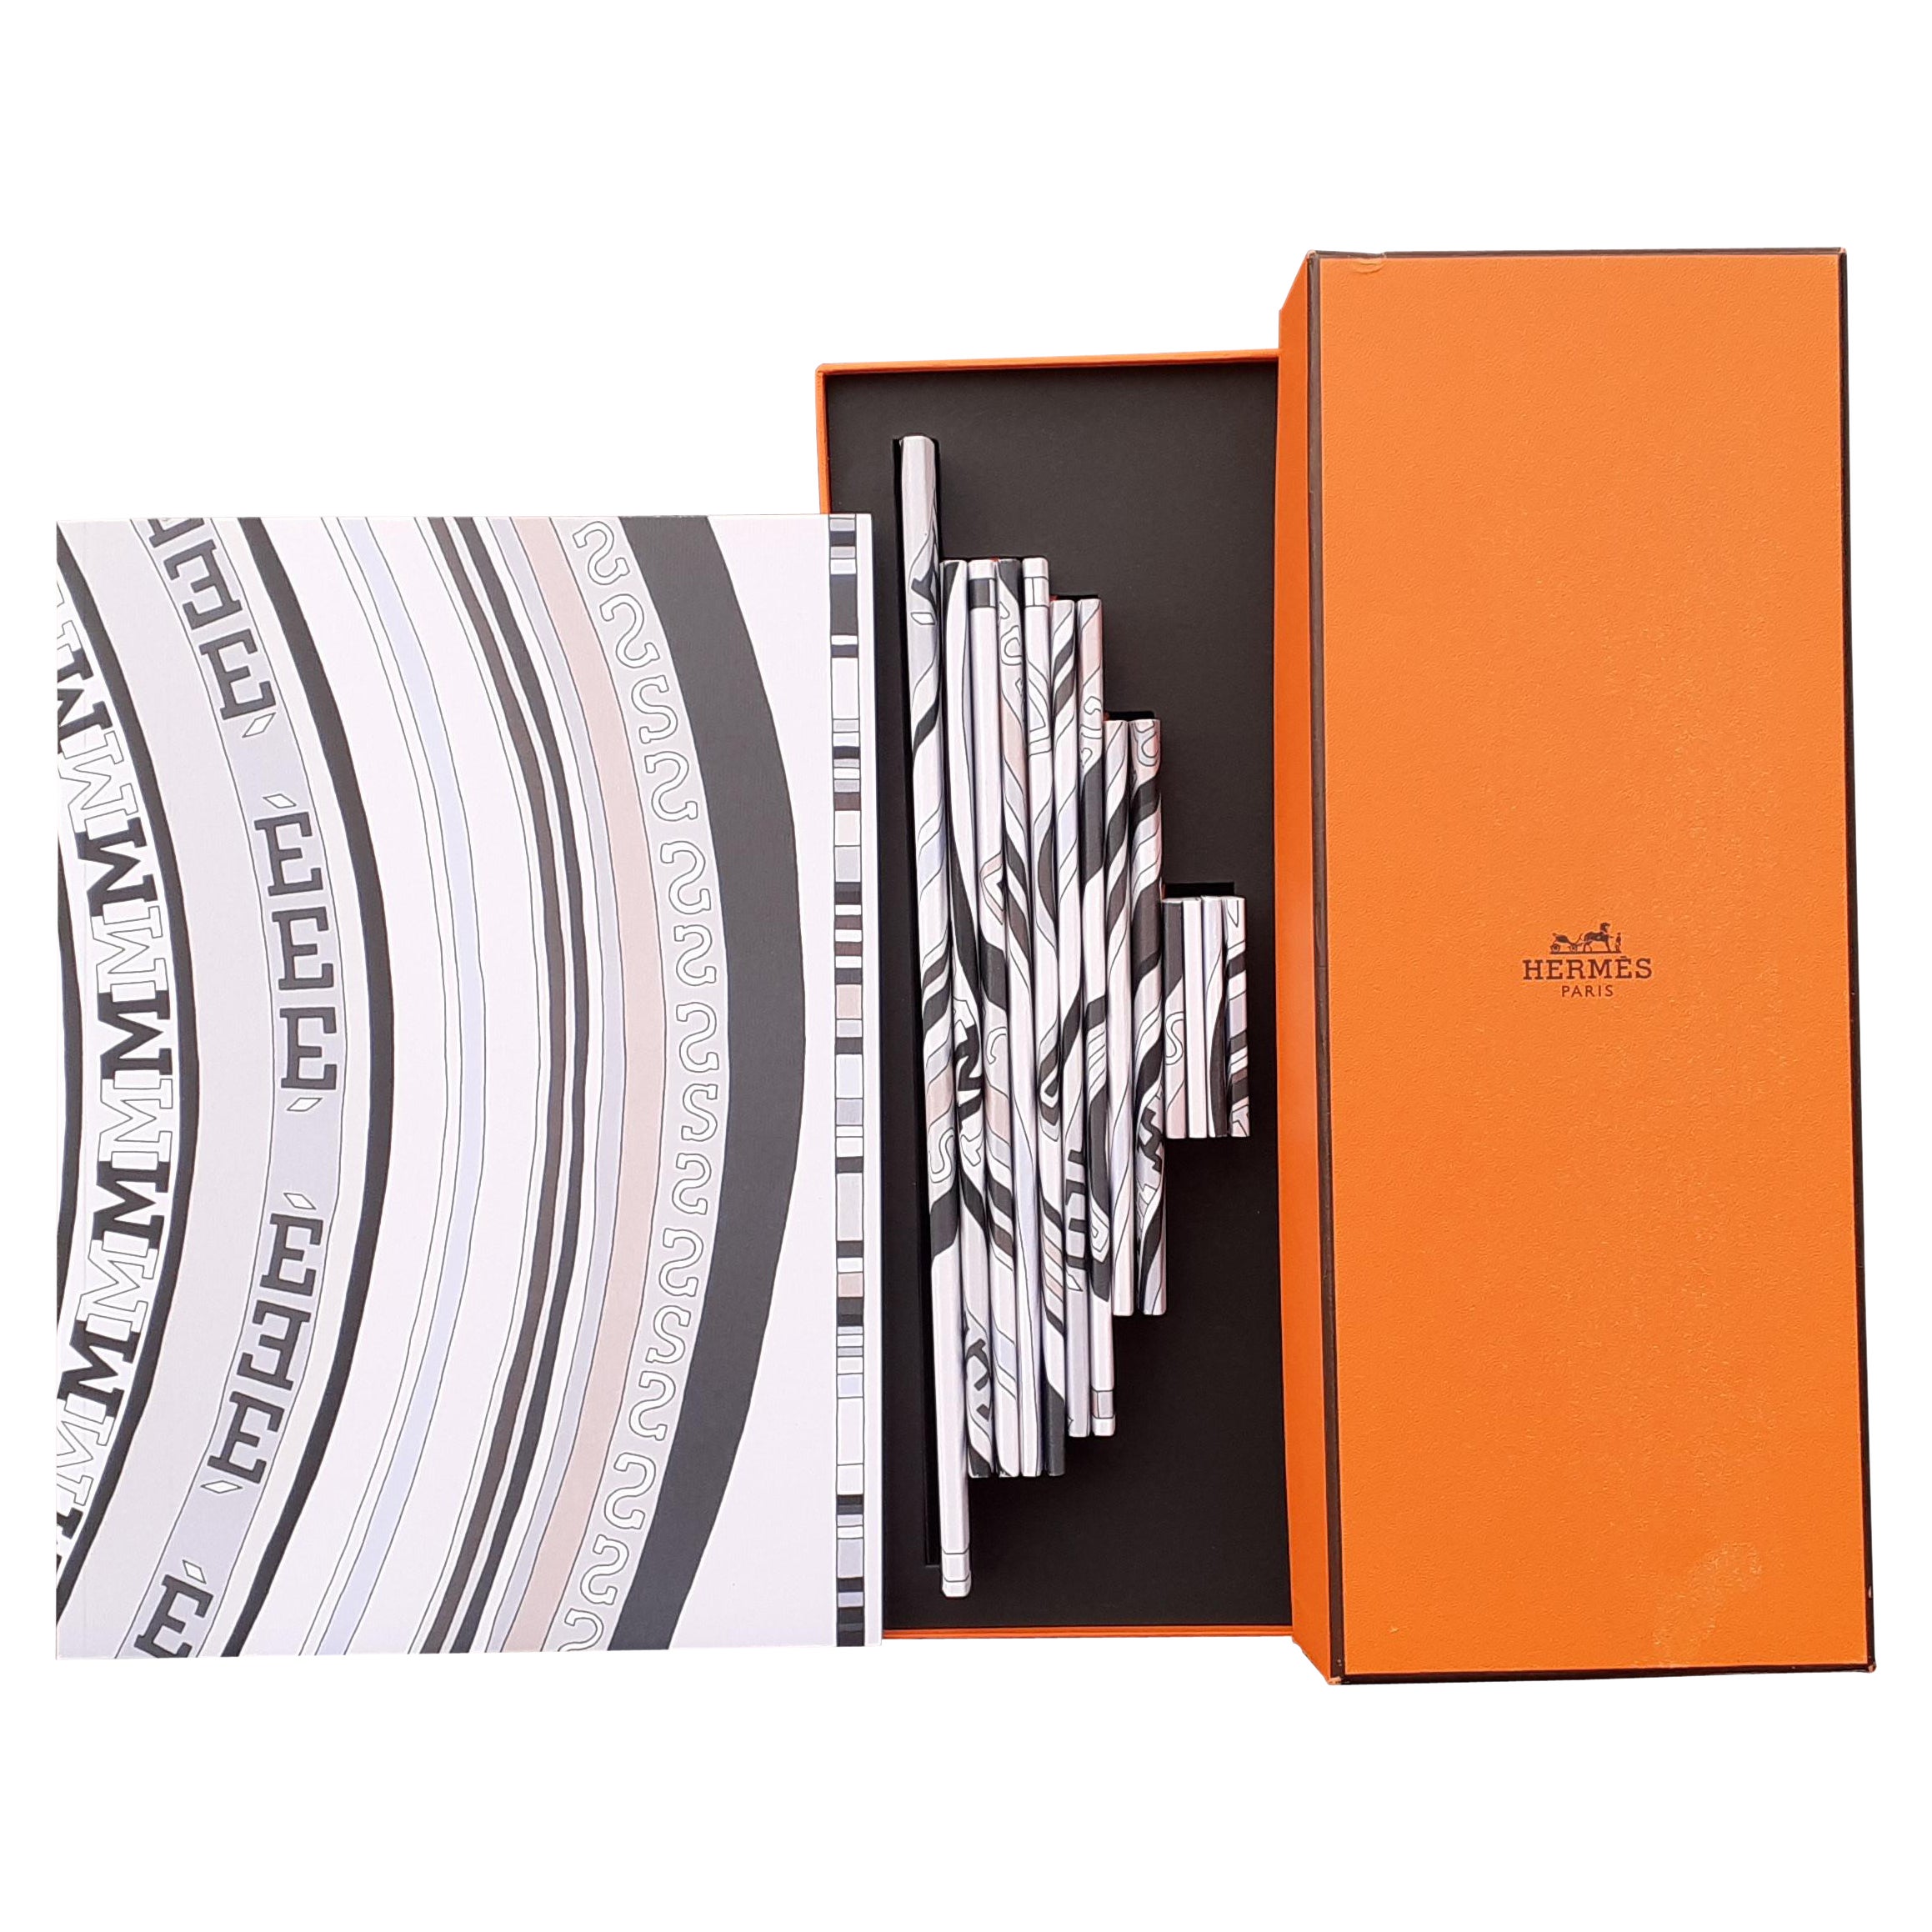 Hermès - Ensemble de 14 Notepads Tohu Bohu à motifs dans une boîte en vente